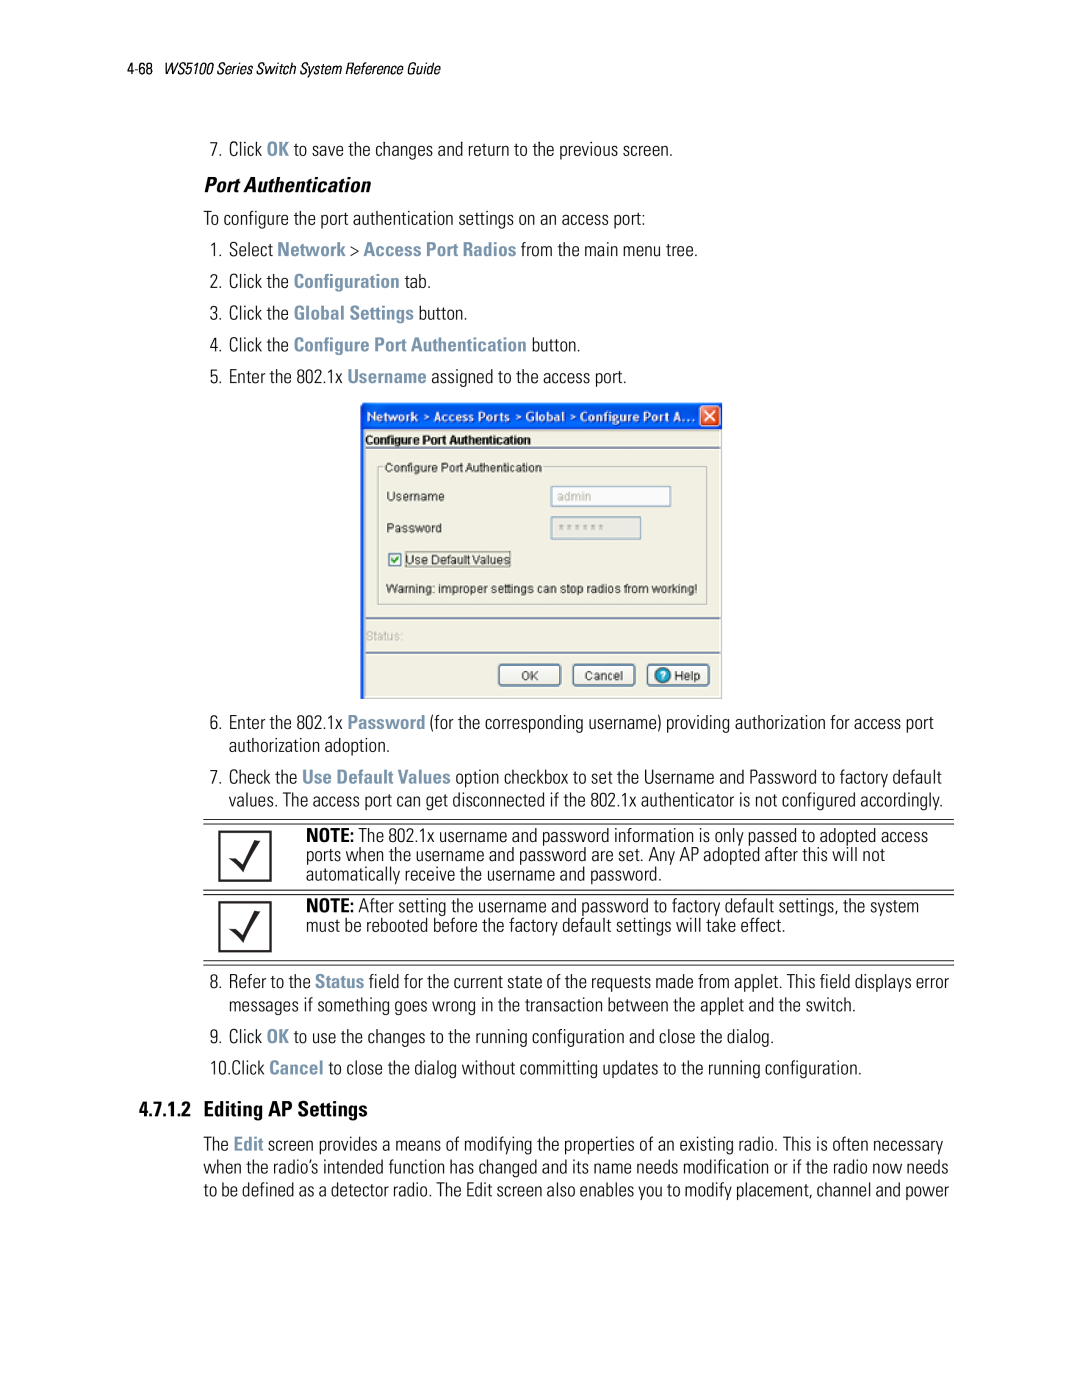 Motorola WS5100 manual Editing AP Settings, Click the Configure Port Authentication button 